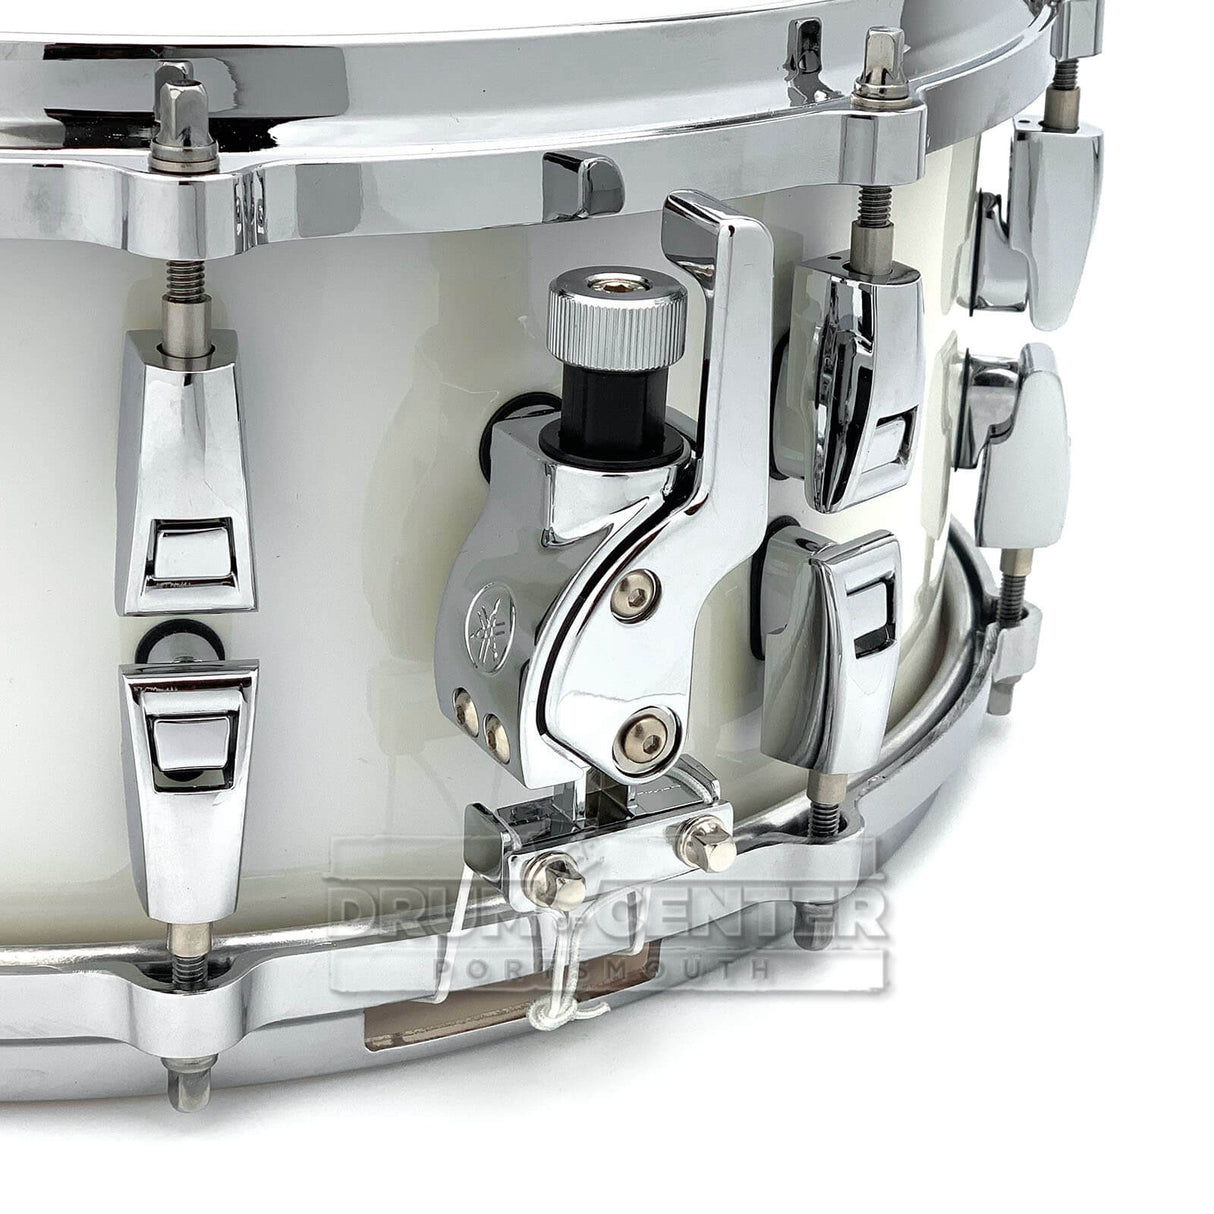 Yamaha Absolute Hybrid Maple Snare Drum 14x6 Polar White - Drum Center Of Portsmouth